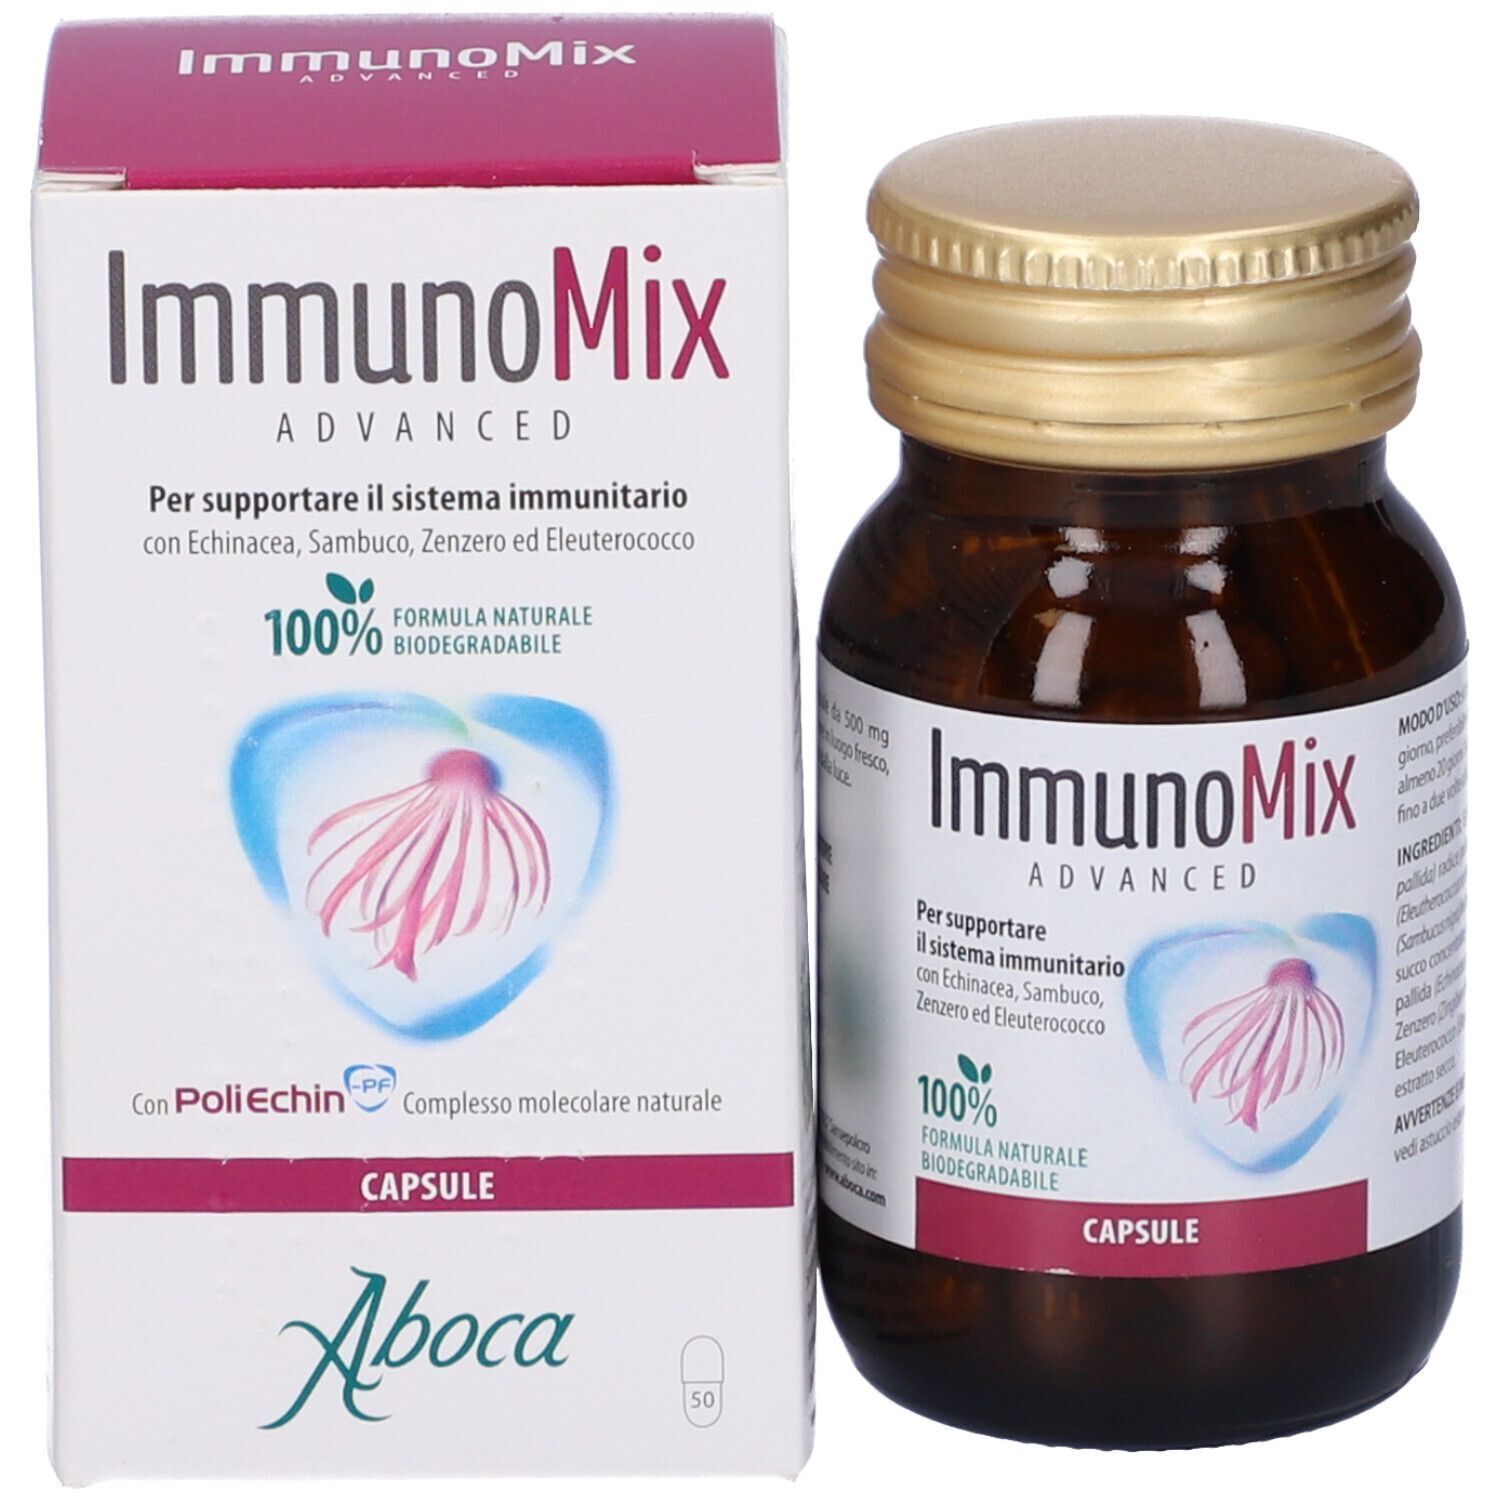 Immunomix Advanced